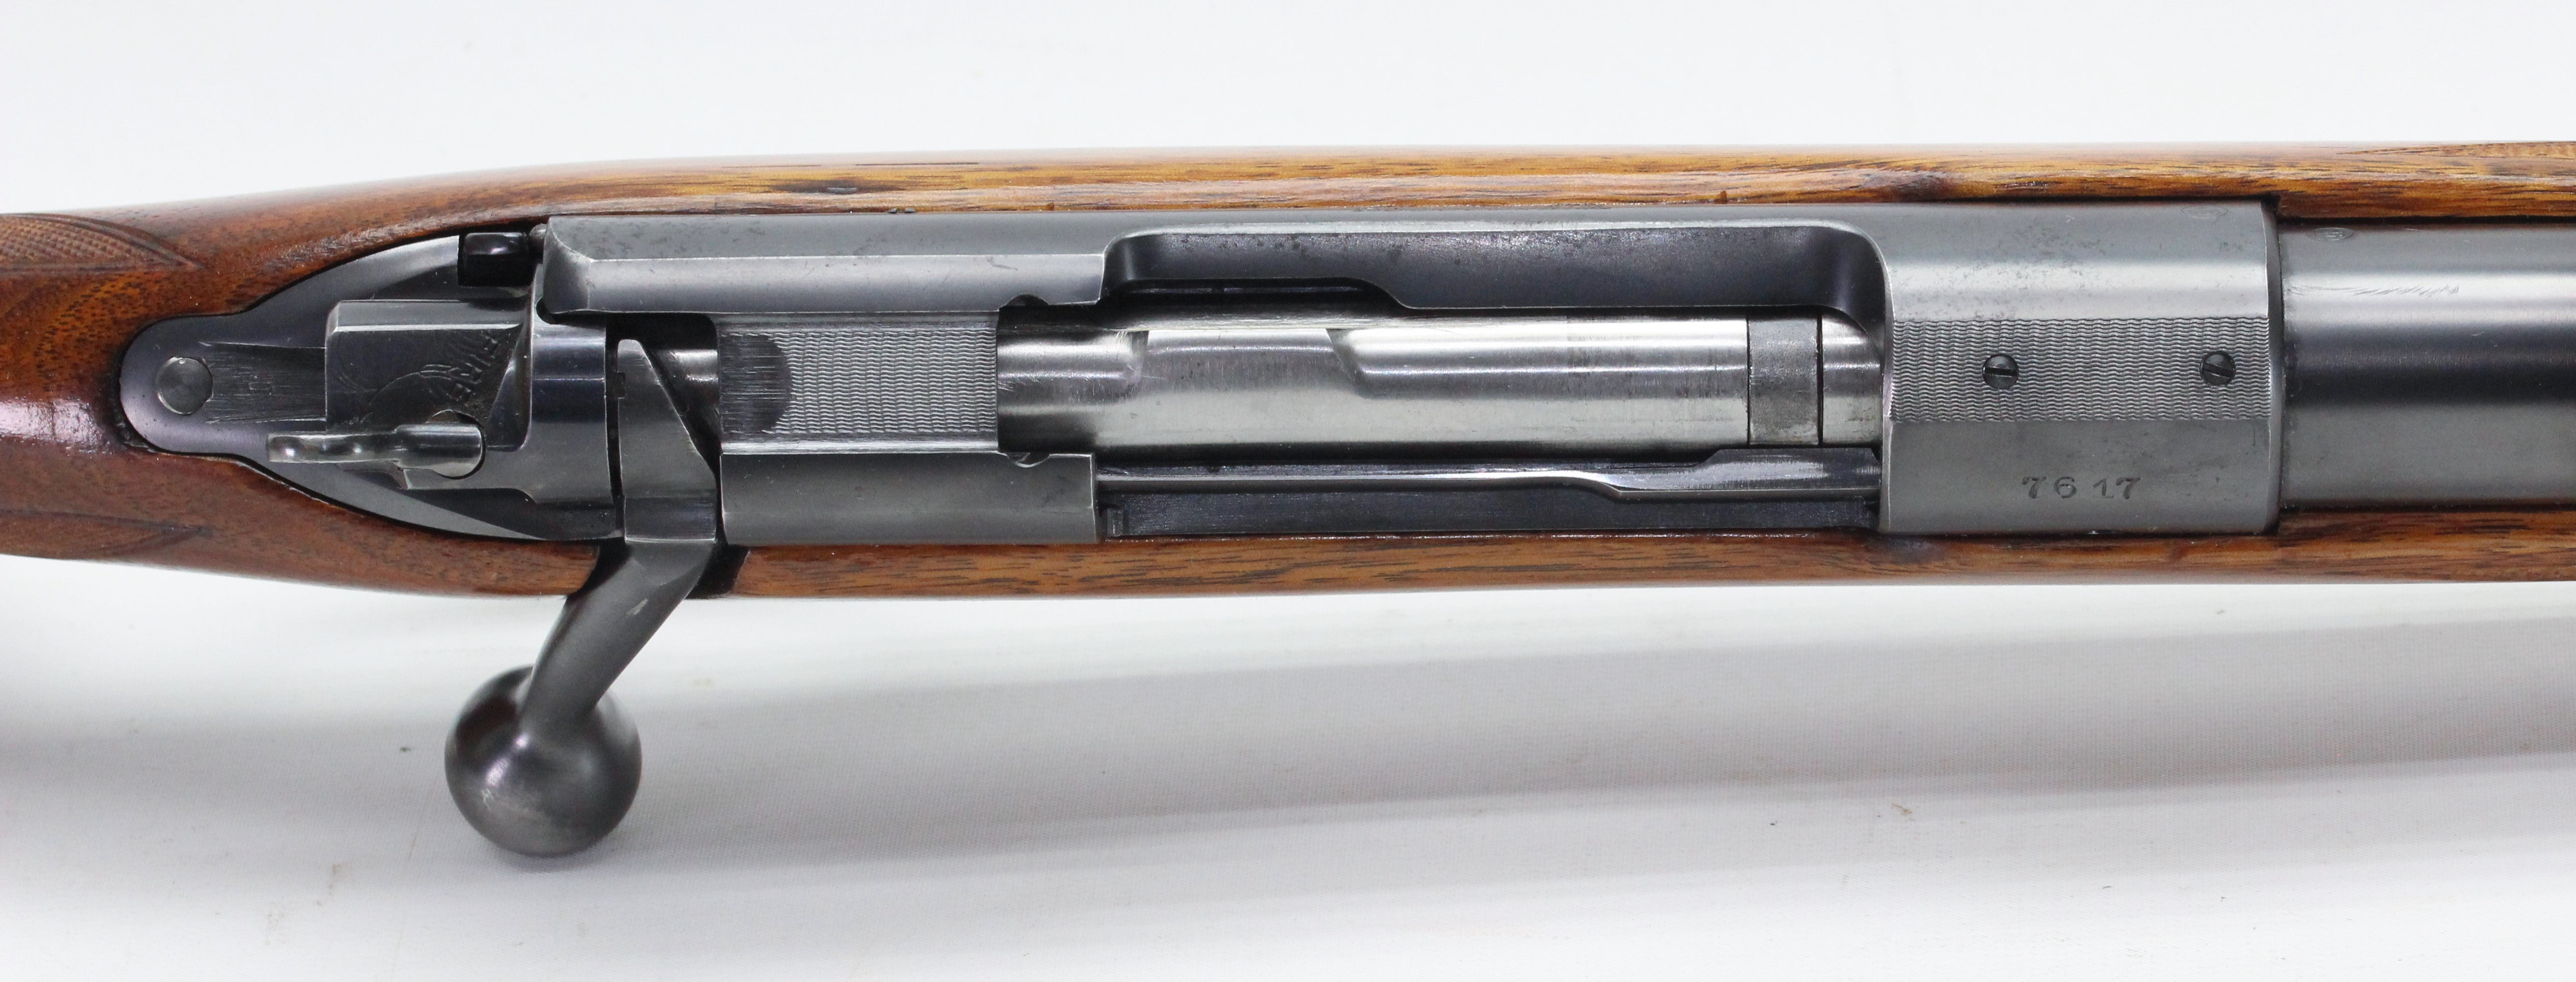 .22 Hornet Standard Rifle - 1937